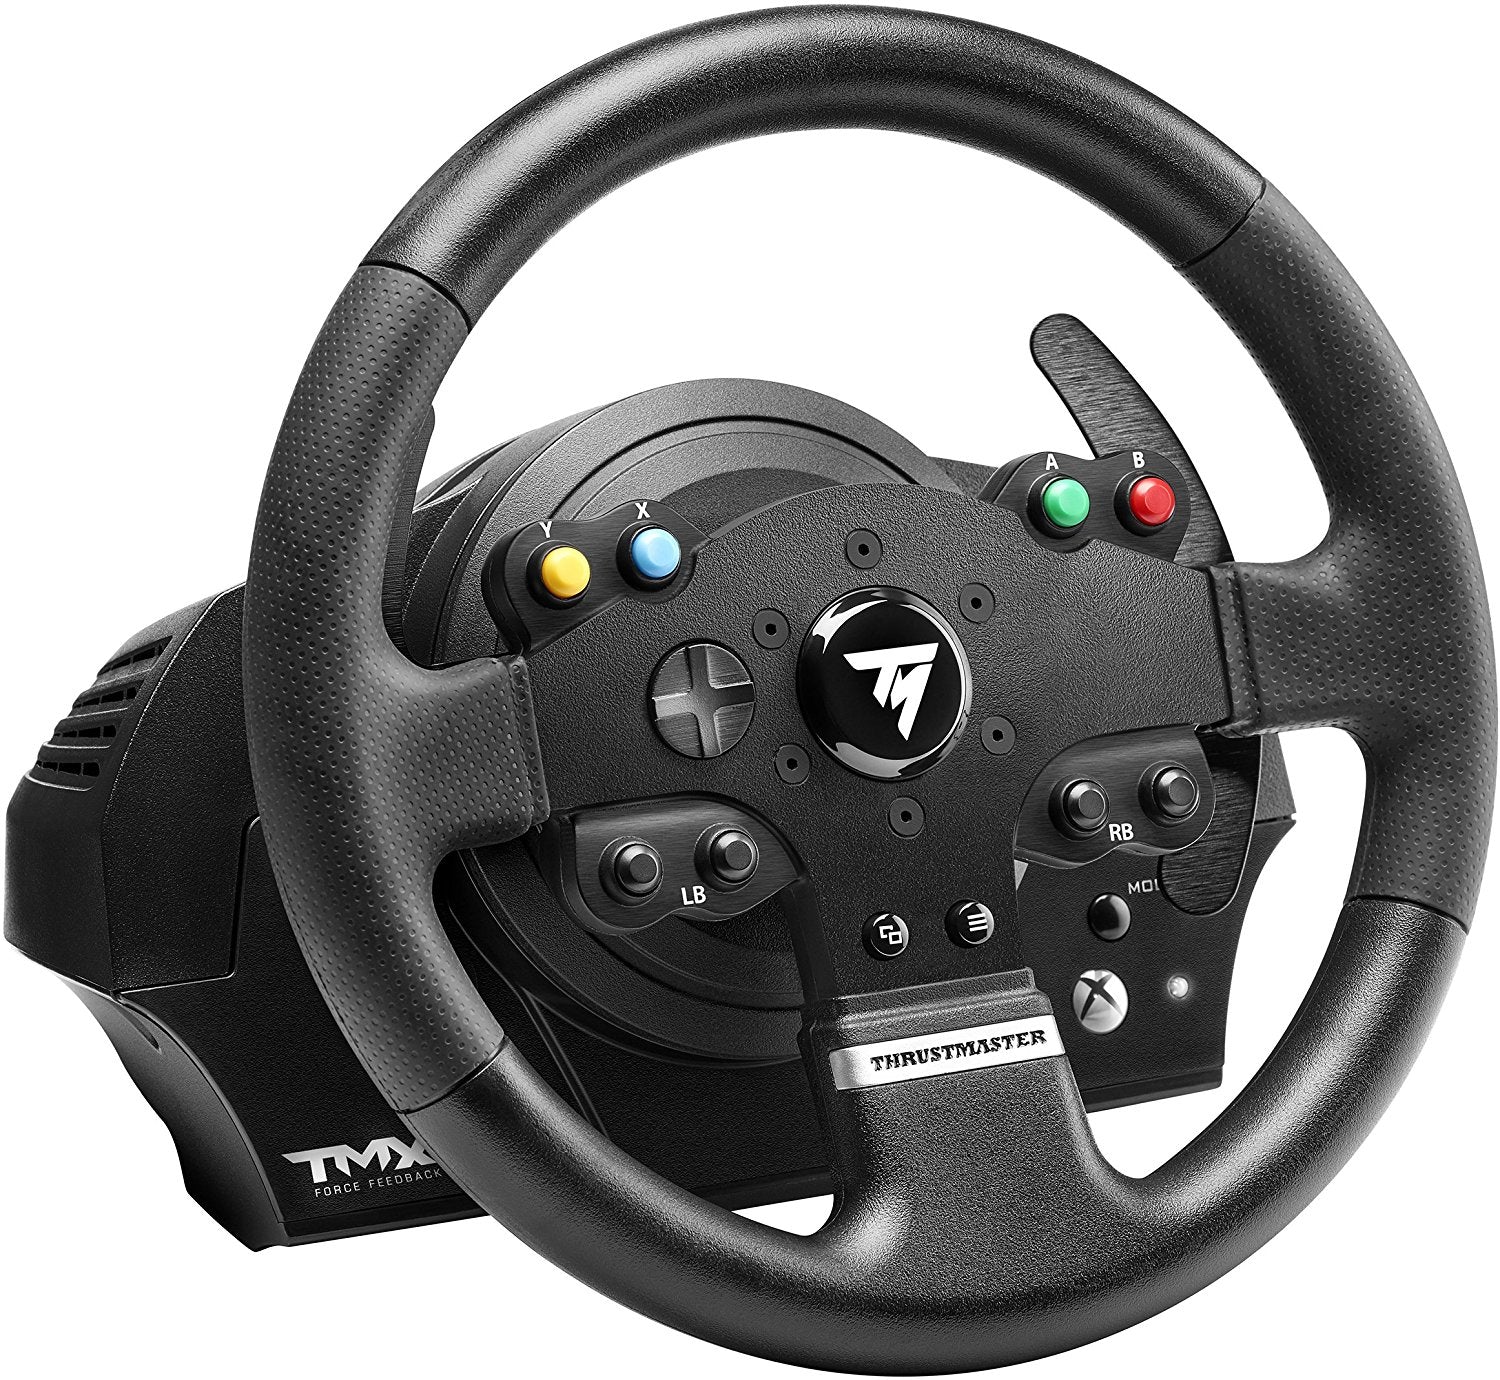 Thrustmaster TMX Force Feedback racing wheel for Xbox One and WINDOWS QG9-00116